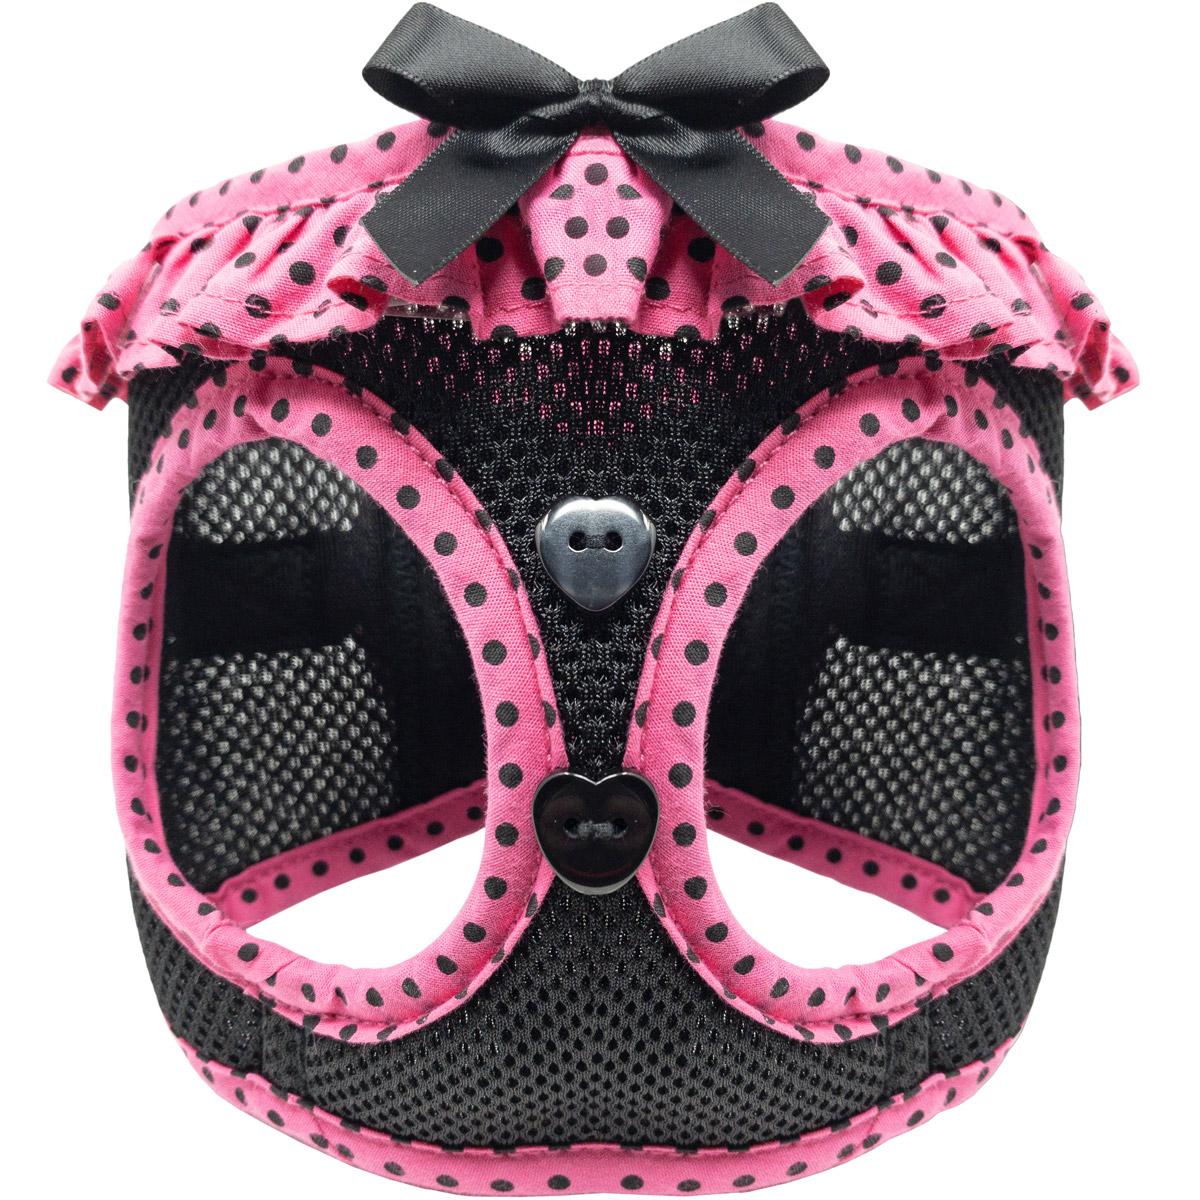 American River Choke Free Dog Harness - Hot Pink and Black Polka Dot